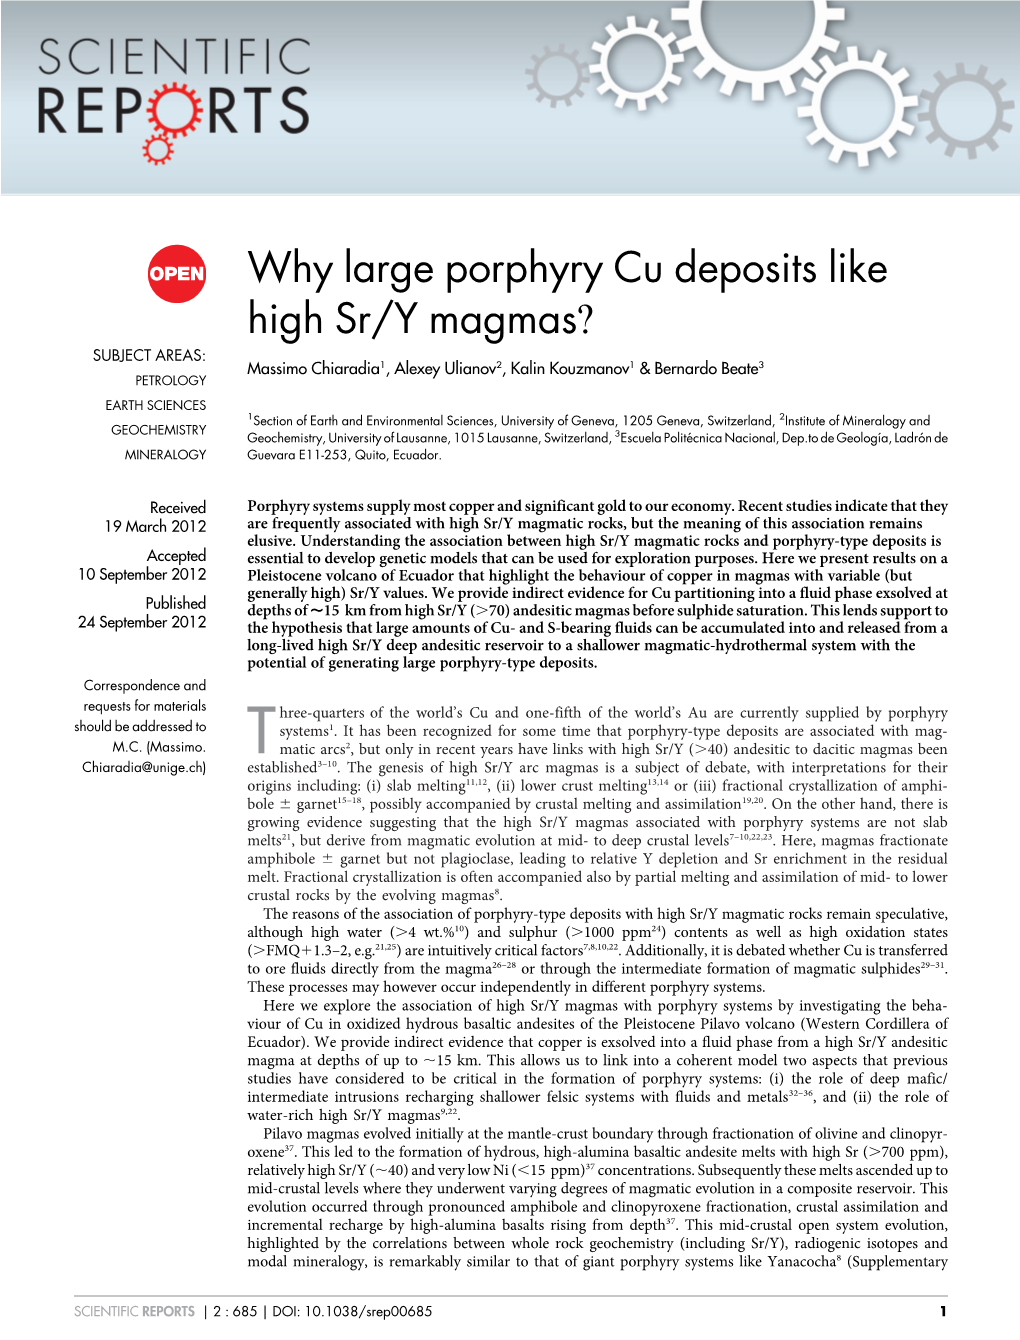 Why Large Porphyry Cu Deposits Like High Sr/Y Magmas?